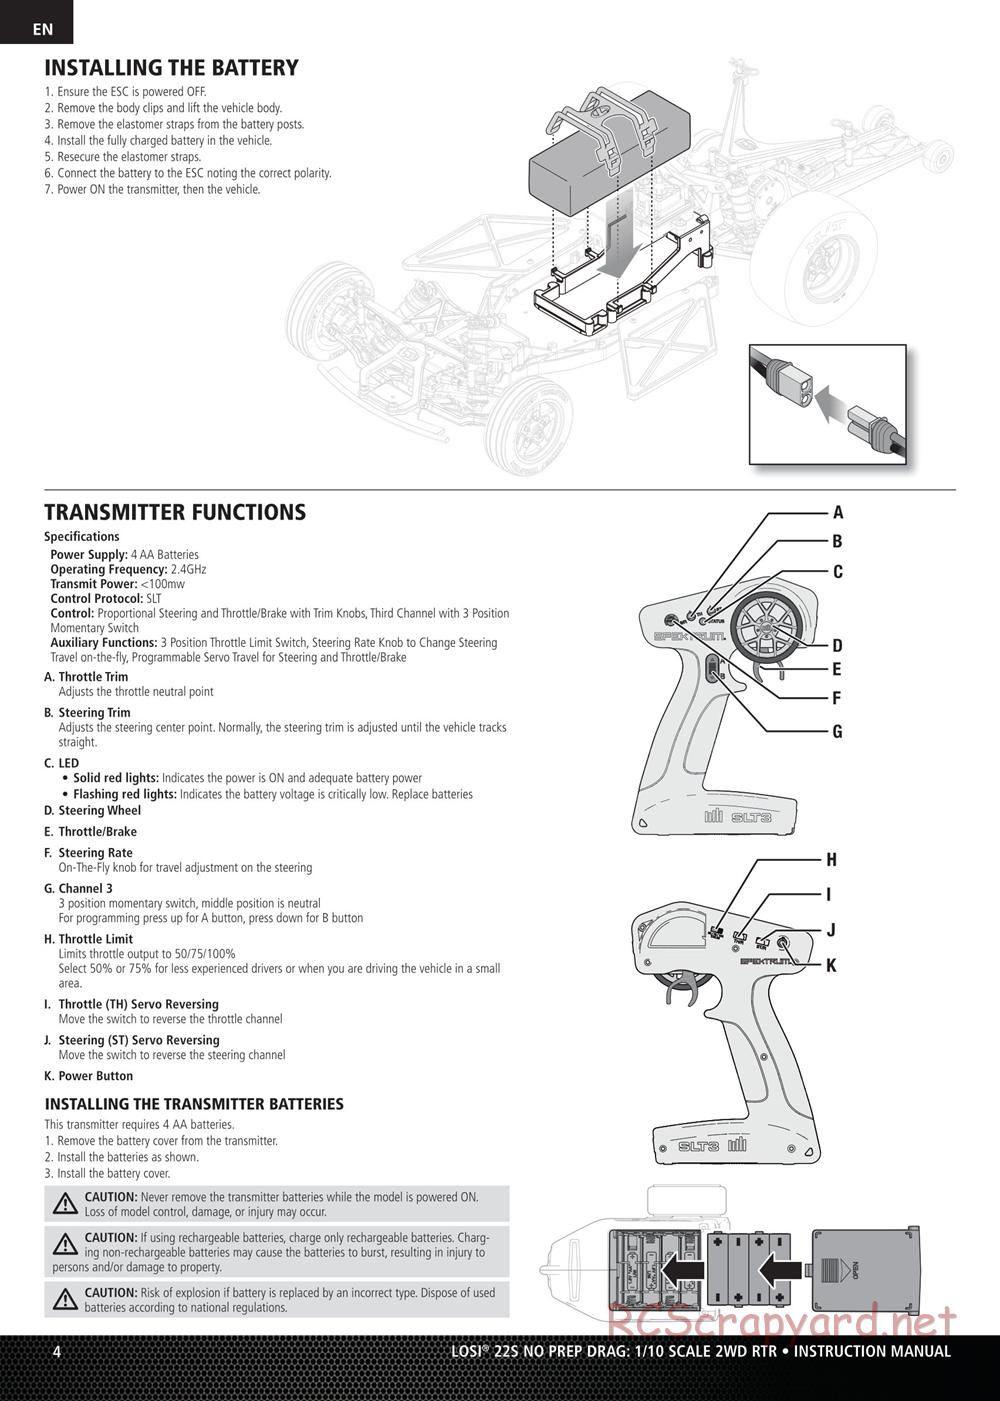 Team Losi - 22S - 69 Camaro Drag Car - Manual - Page 4